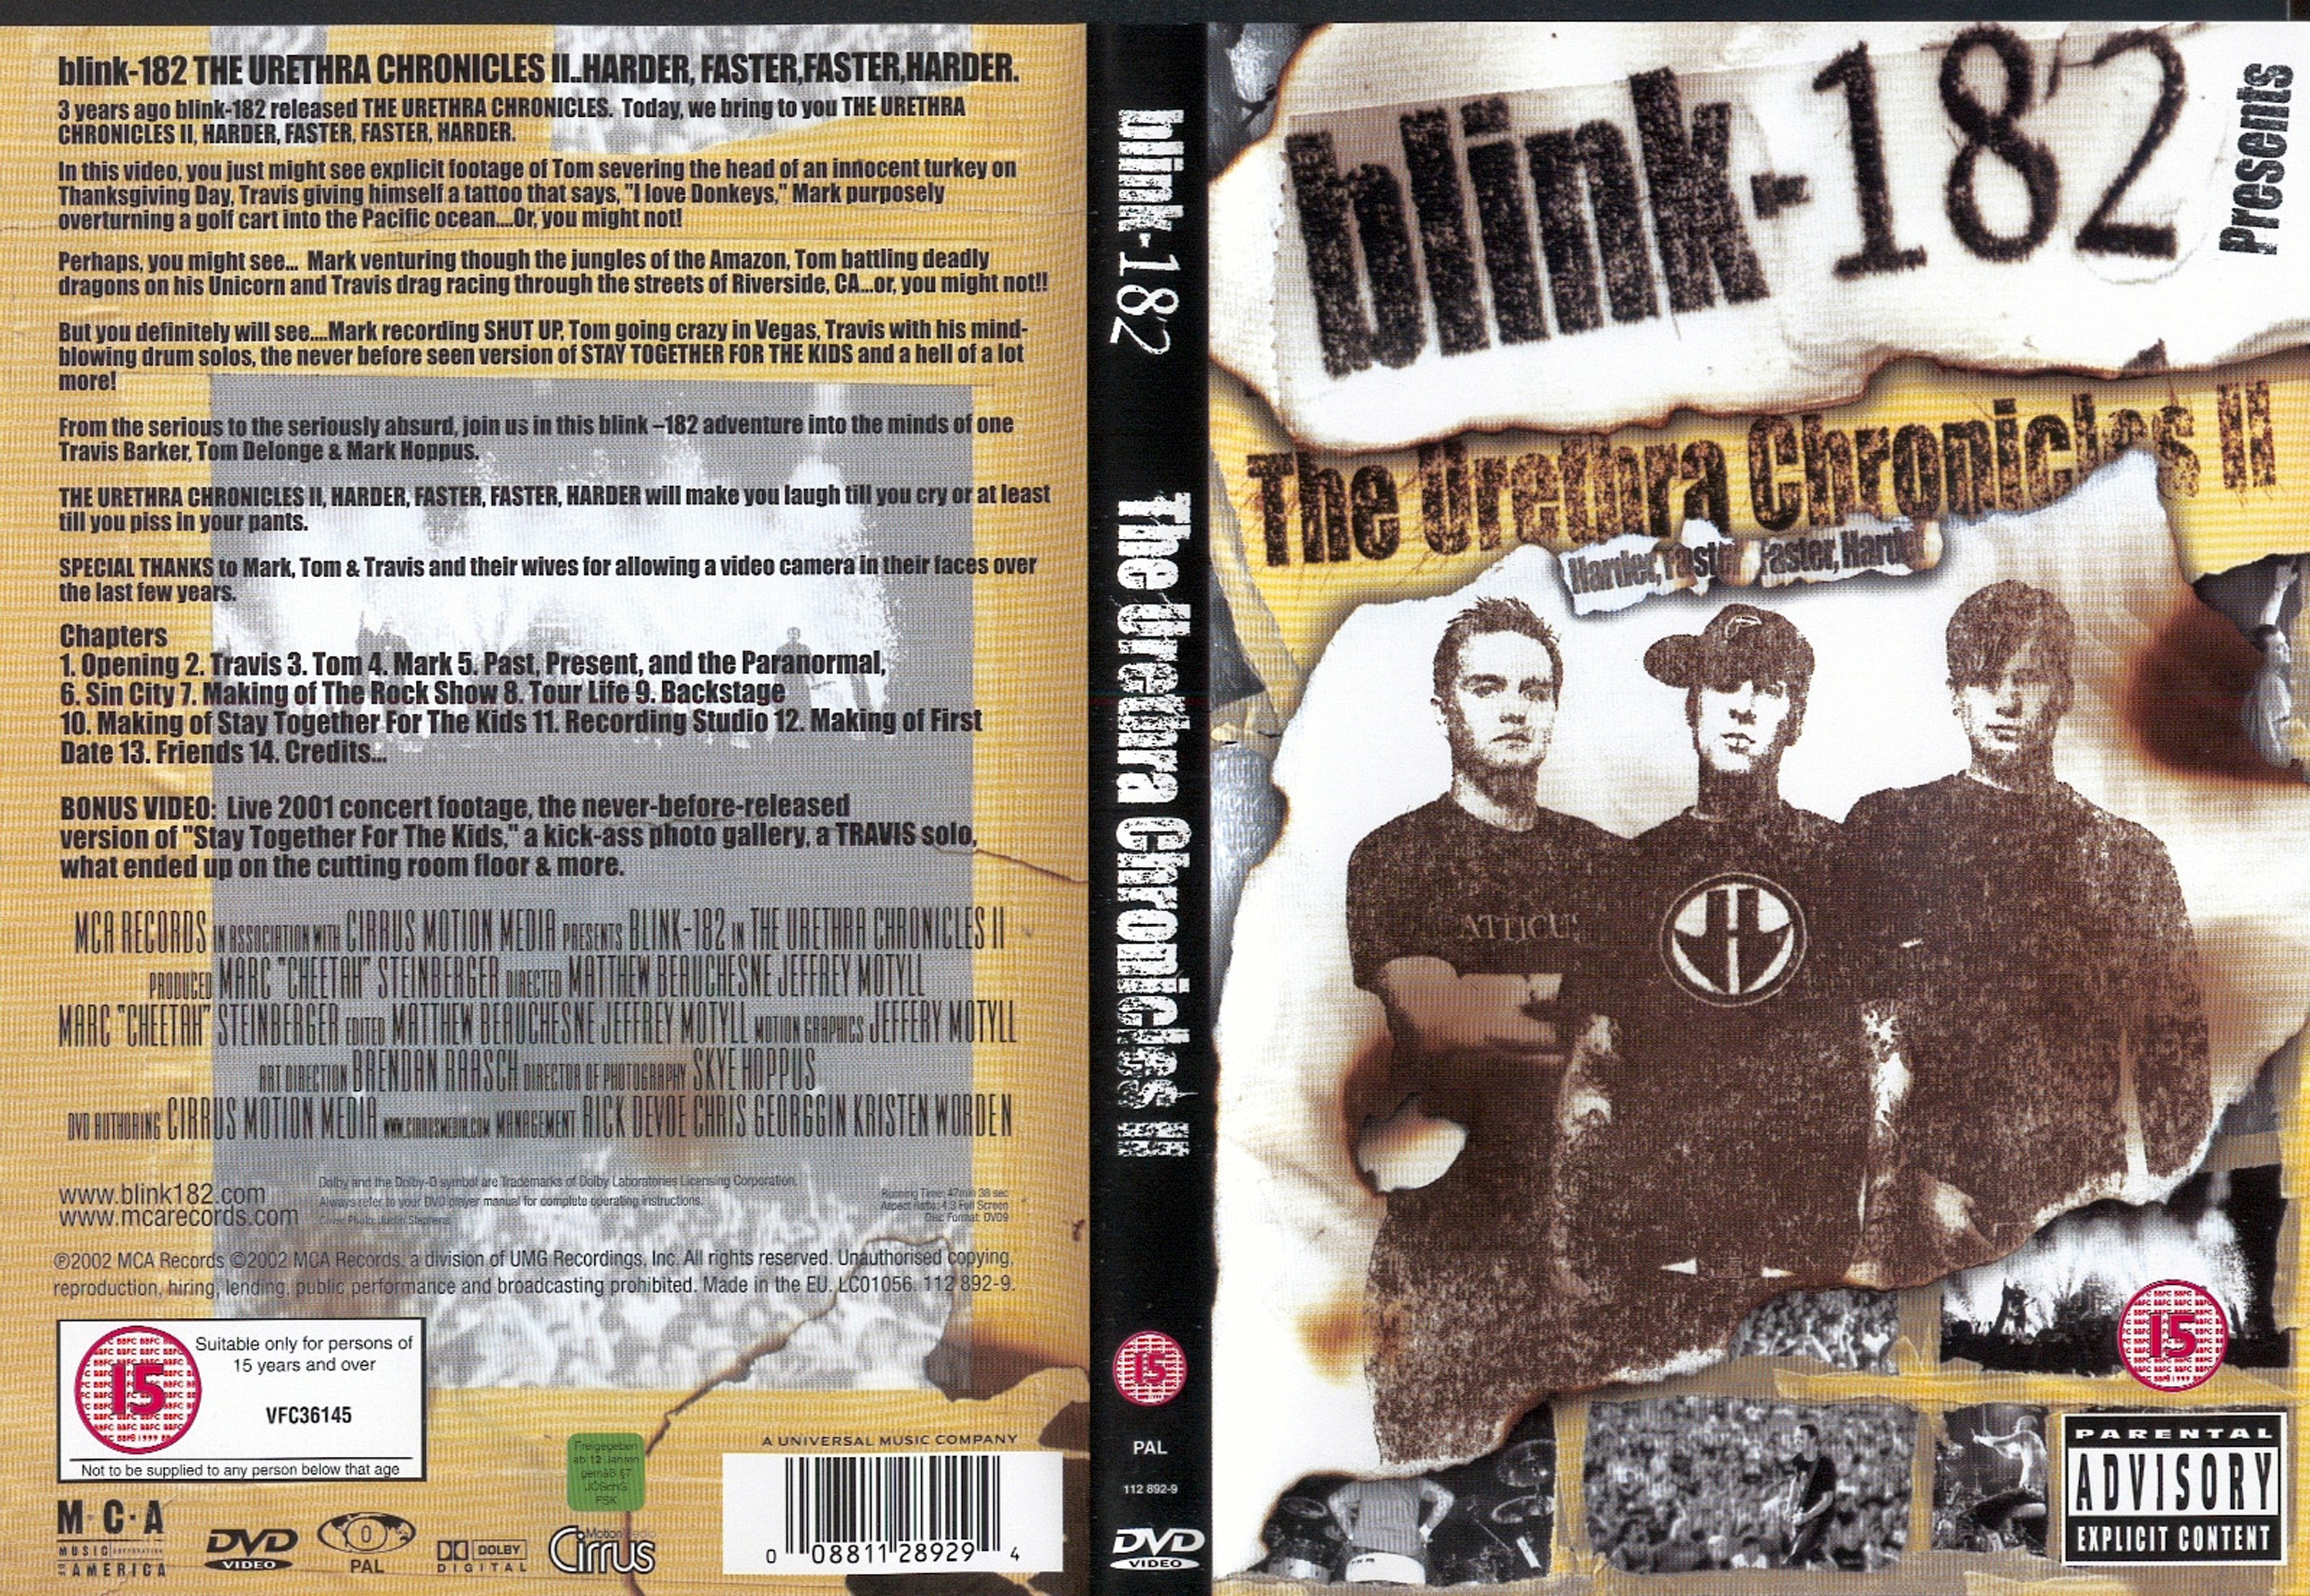 Jaquette DVD Blink 182 urethra chronicles 2